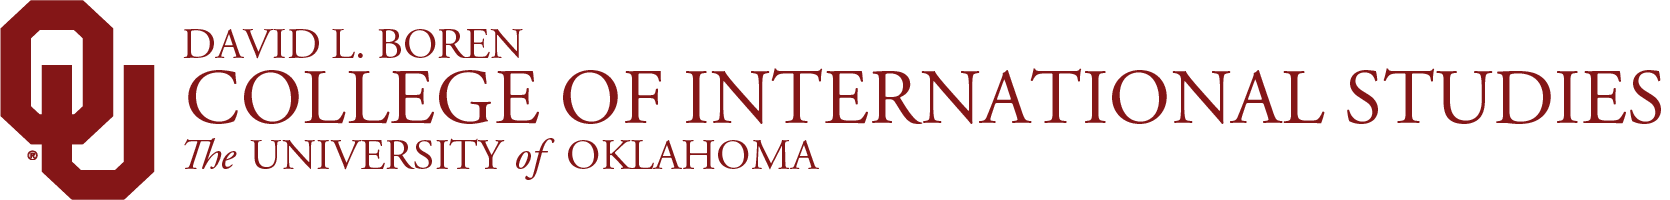 OU College of International Studies, The University of Oklahoma website wordmark